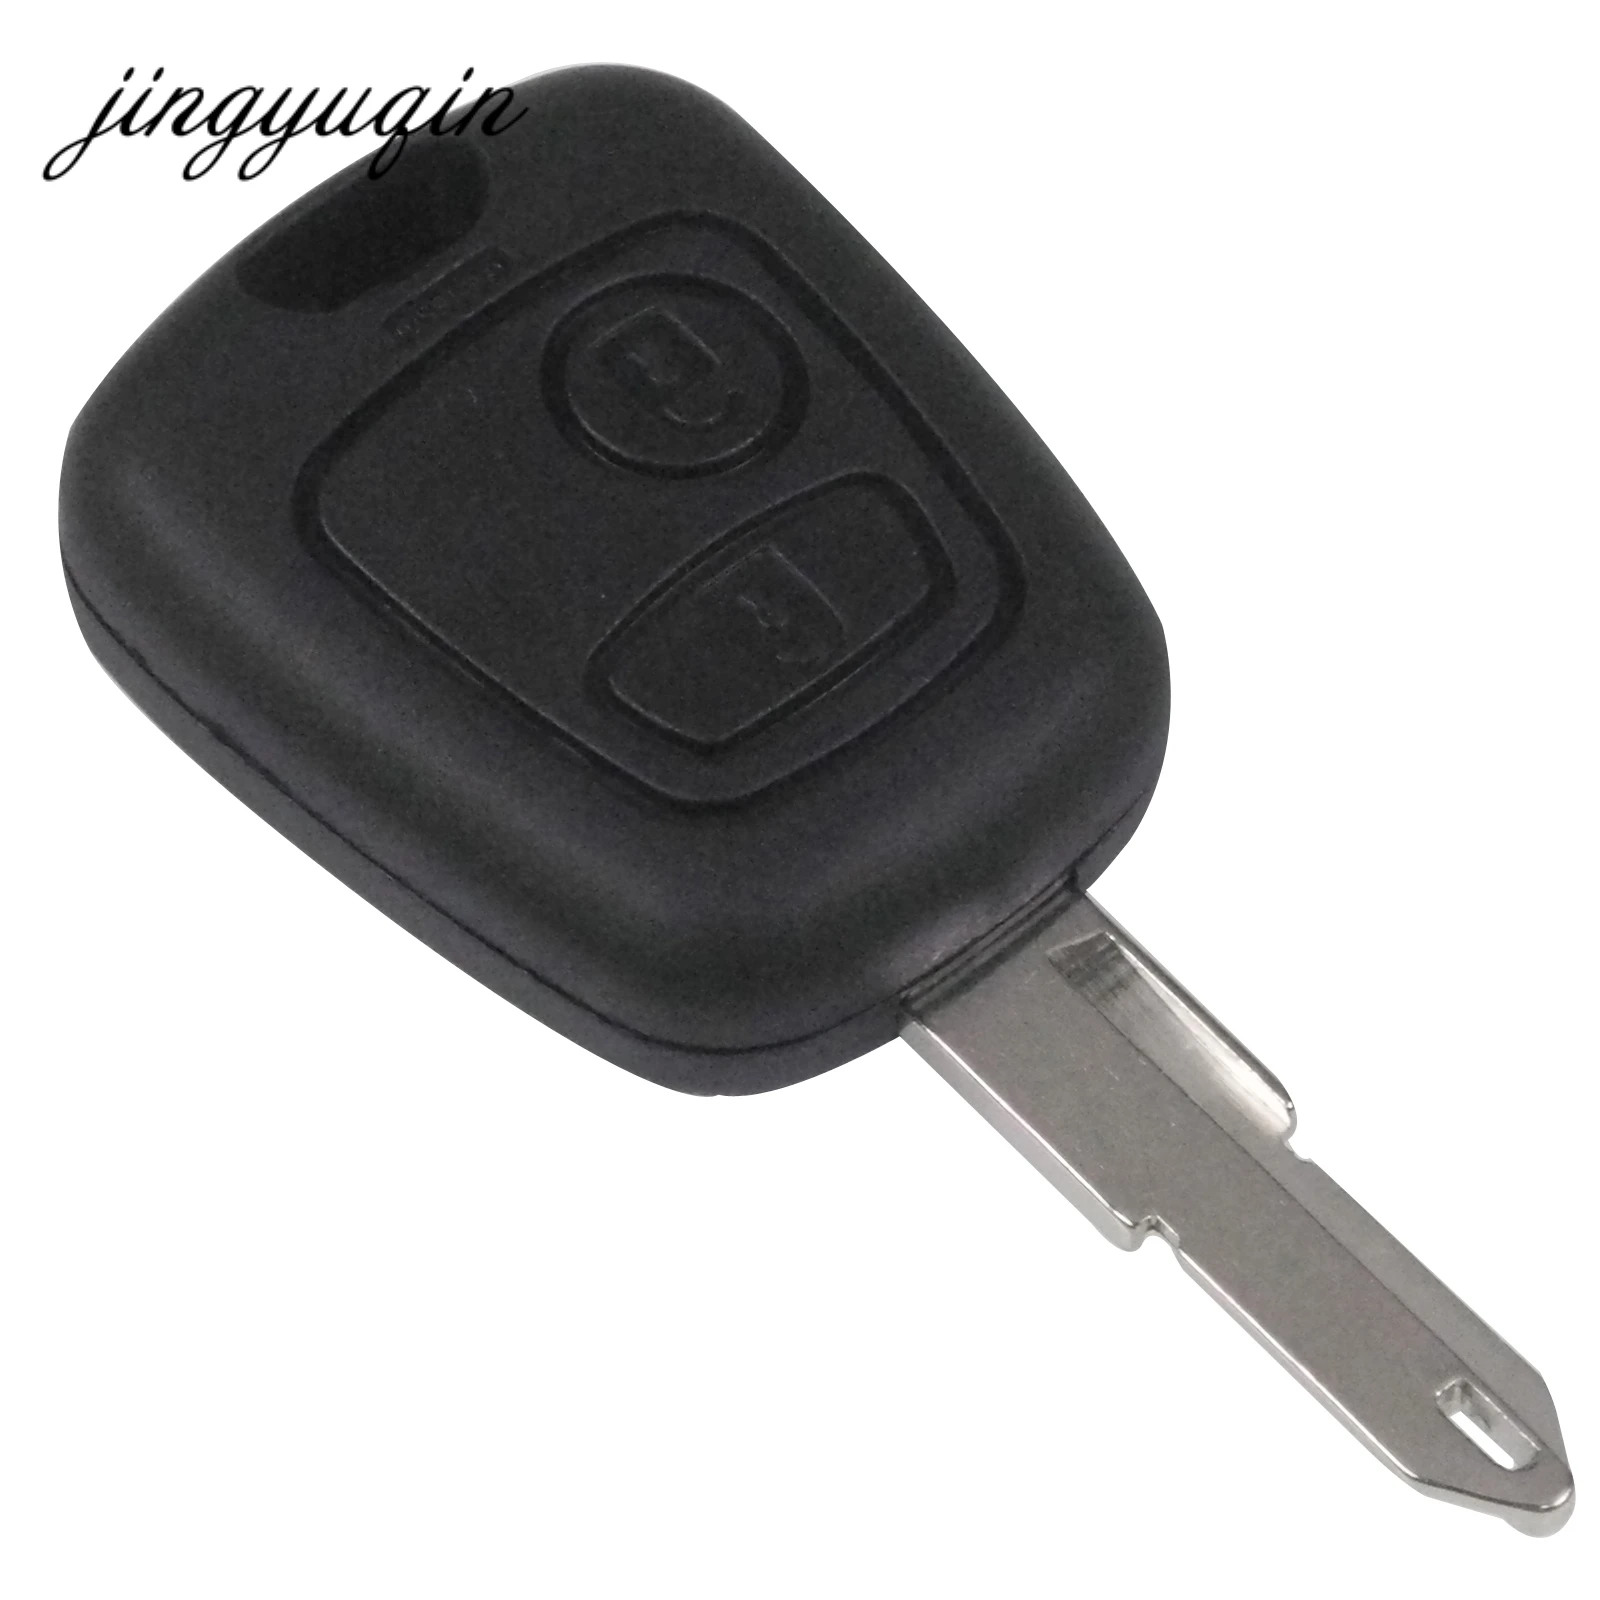 

jingyuqin 10pcs/lot 2 Button Car Key Fob Shell For Peugeot 206 207 Citroen C1 C2 C4 Ne73 Uncut Blank Blade Remote Fob Case